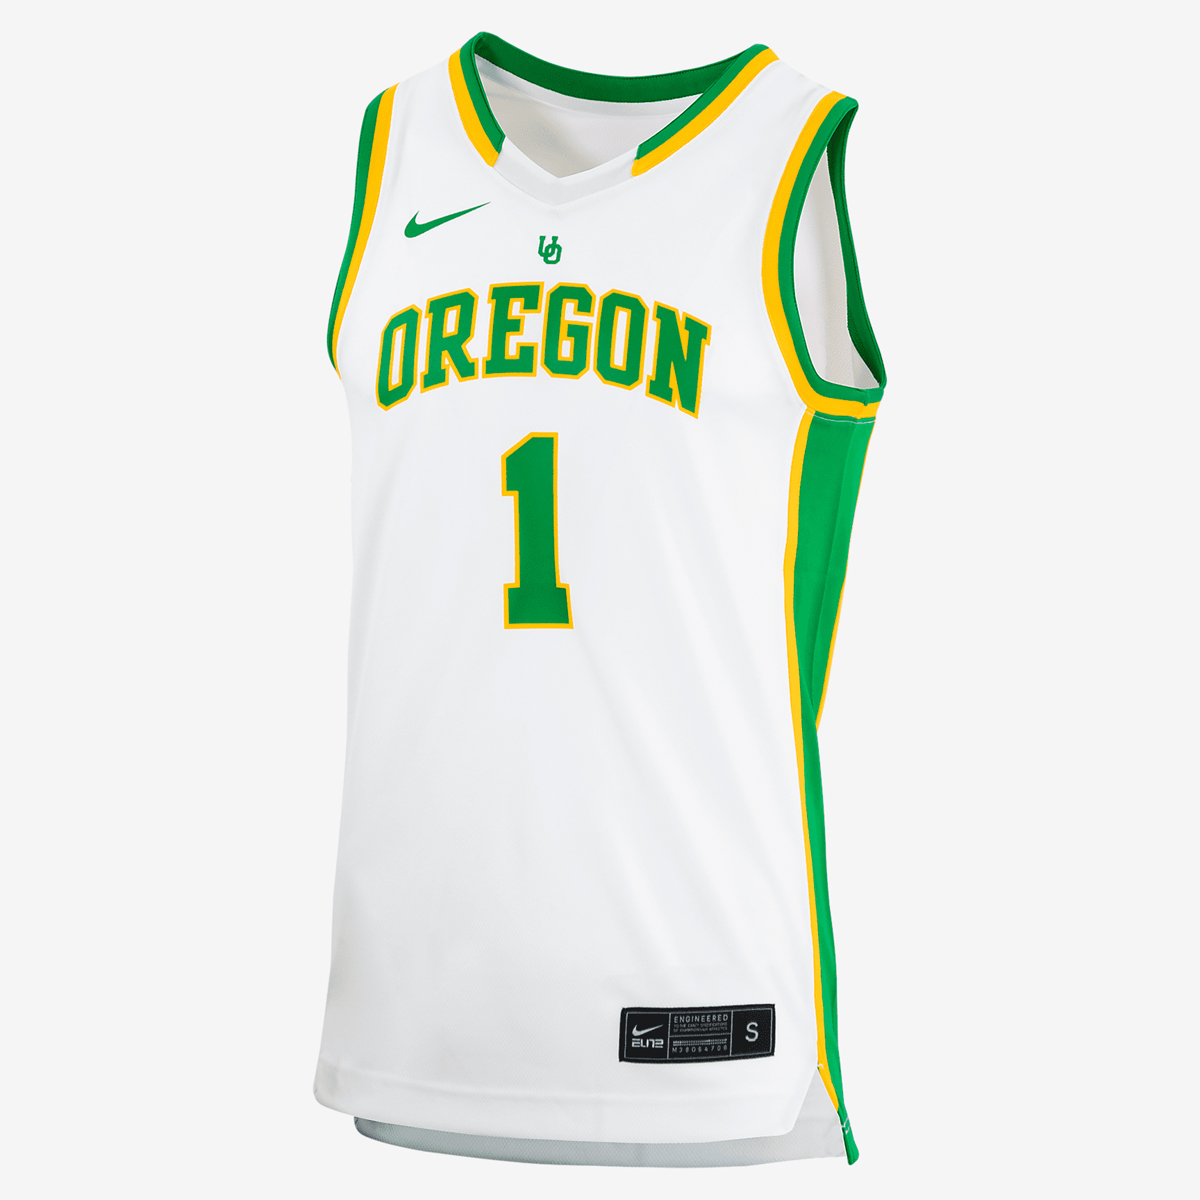 Nike-Dunk-Low-Oregon-Jersey